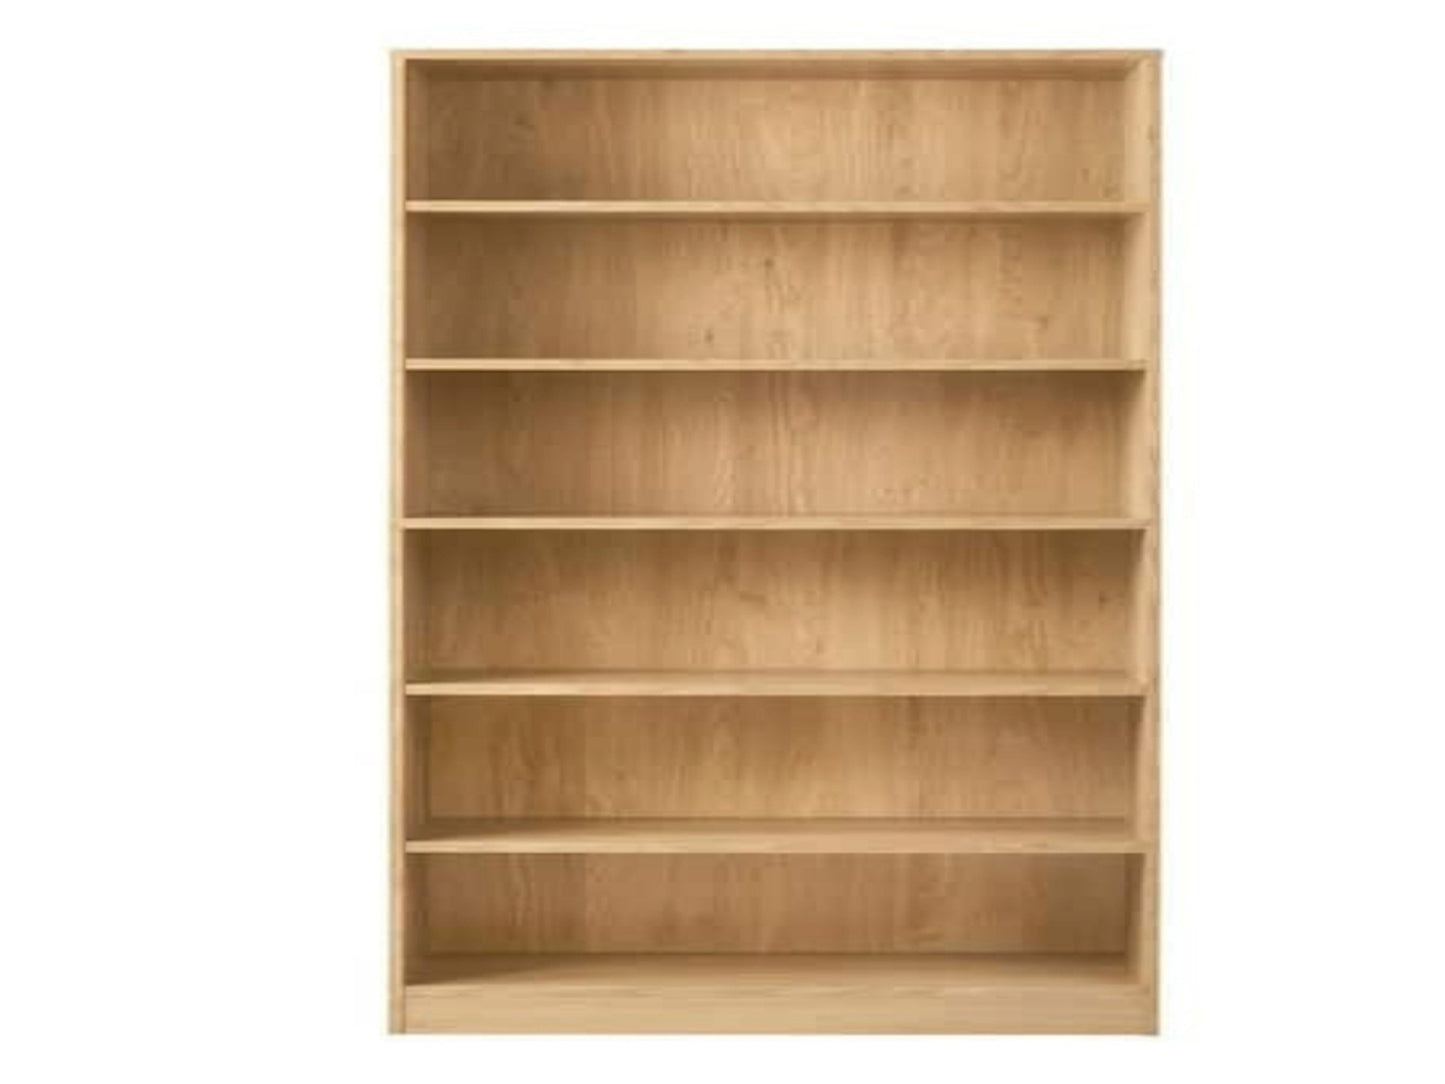 Diy bookcase plan, build plans for bookshelf, book shelves plan